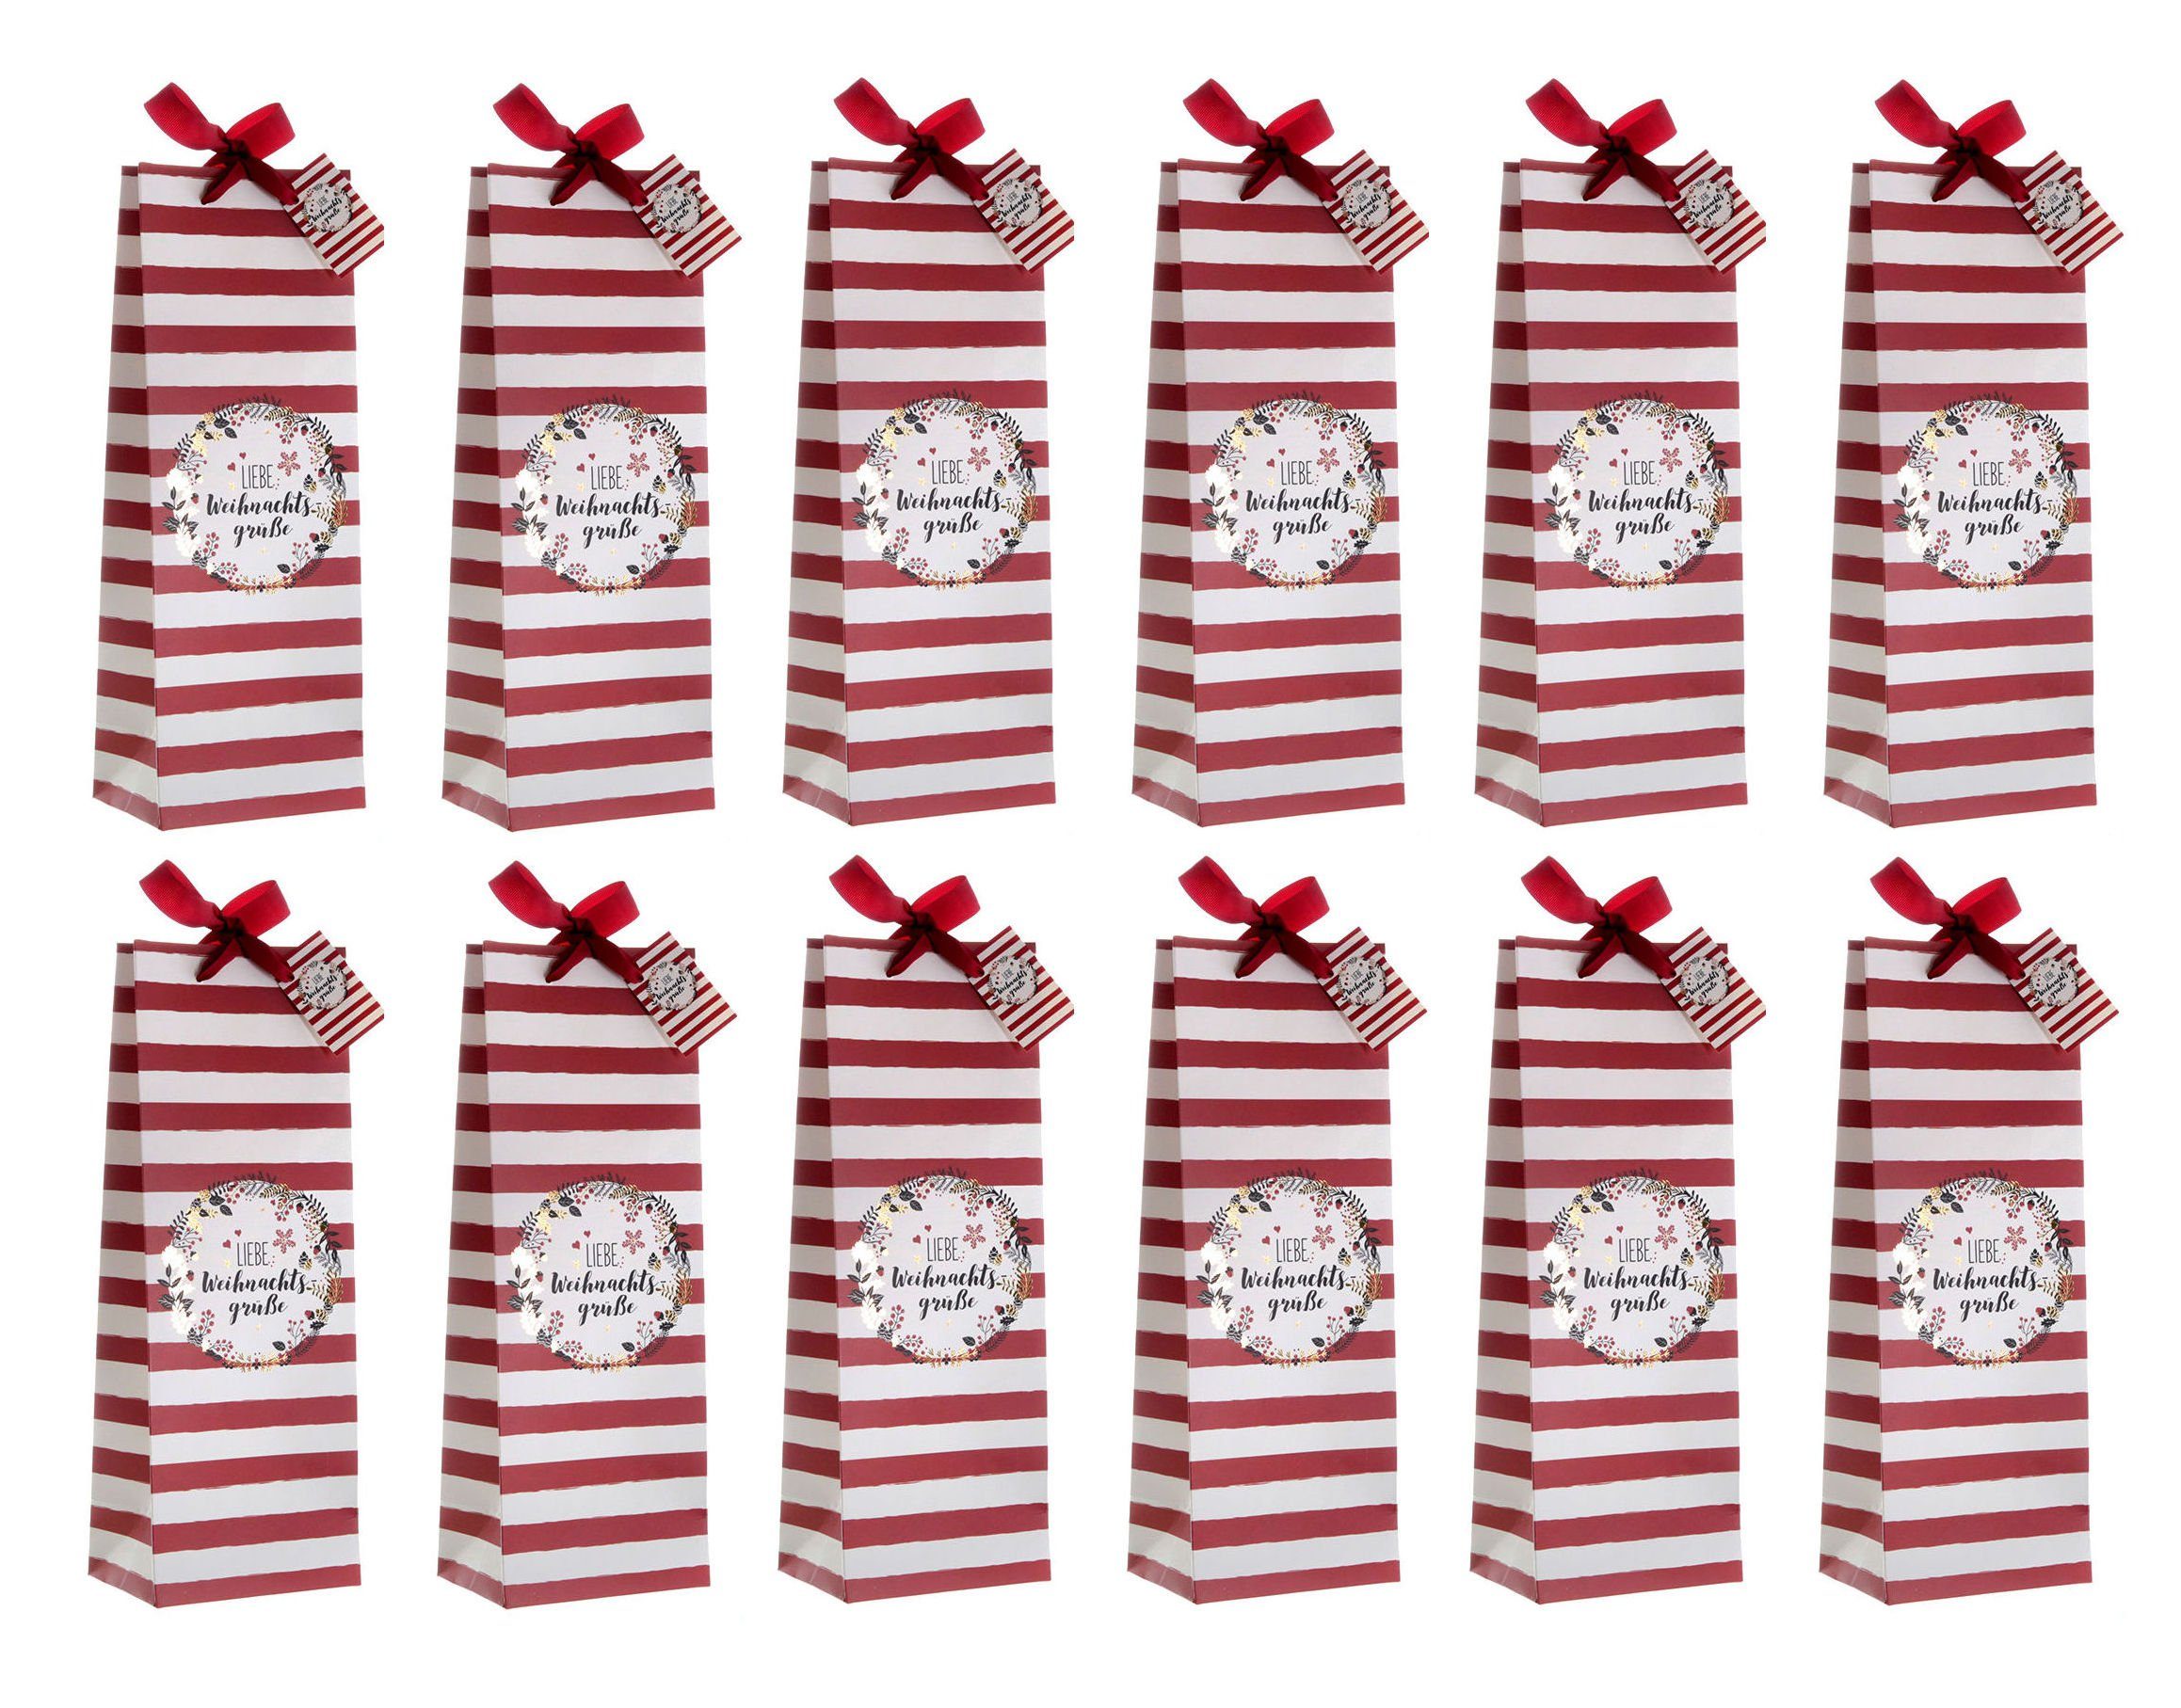 Spetebo Flaschenträger Flaschen Tüte rot weiß - 12er Set, Papier Geschenk Tasche